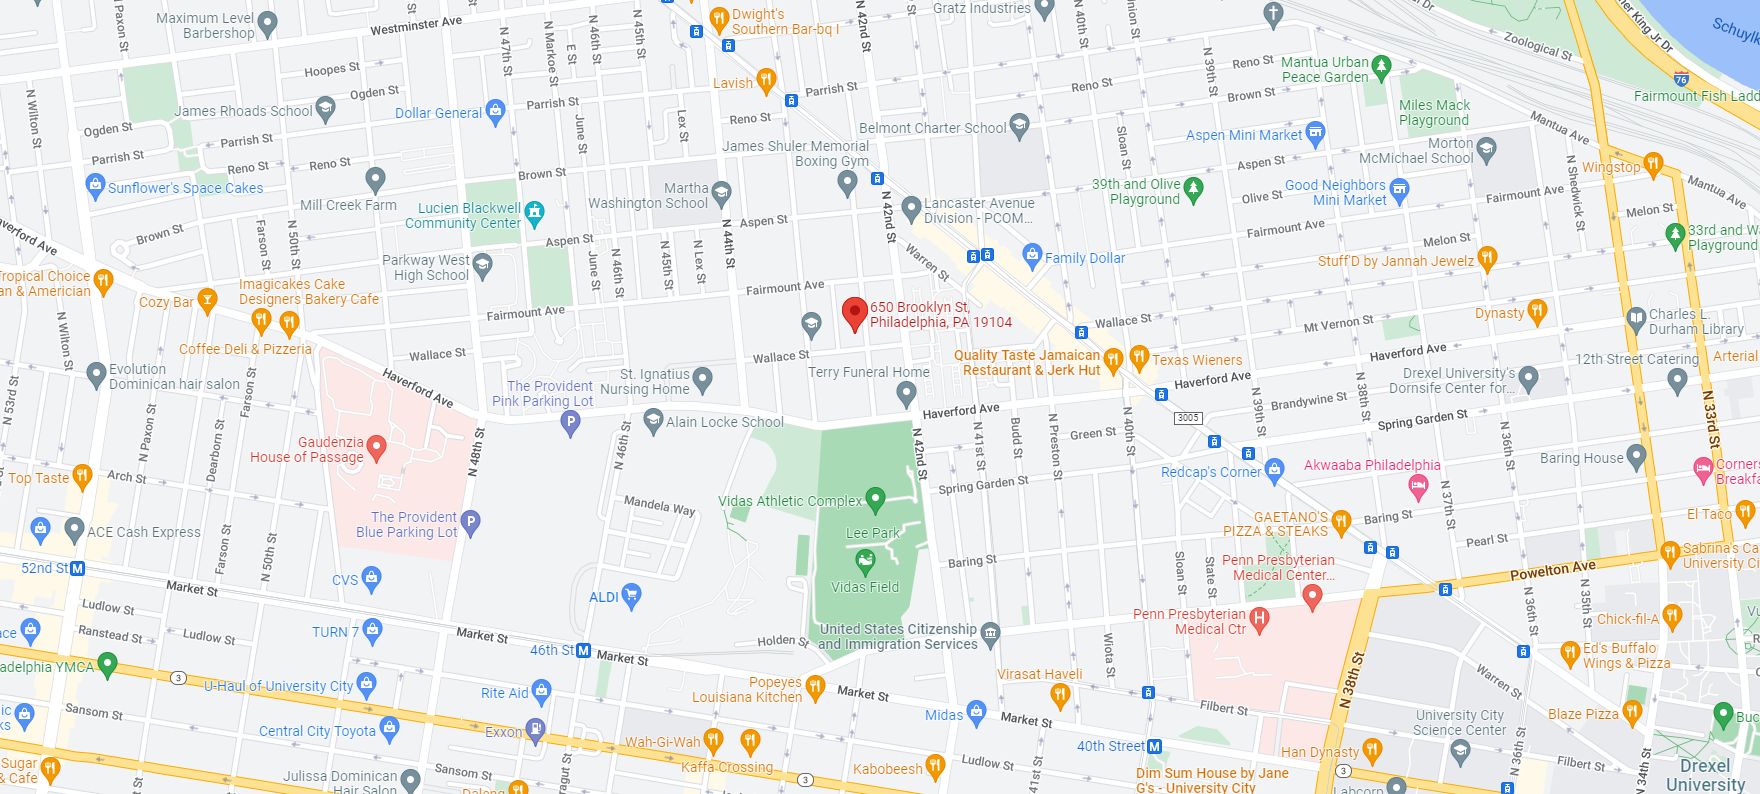 650 Brooklyn Street, Philadelphia. Credit: Google Maps